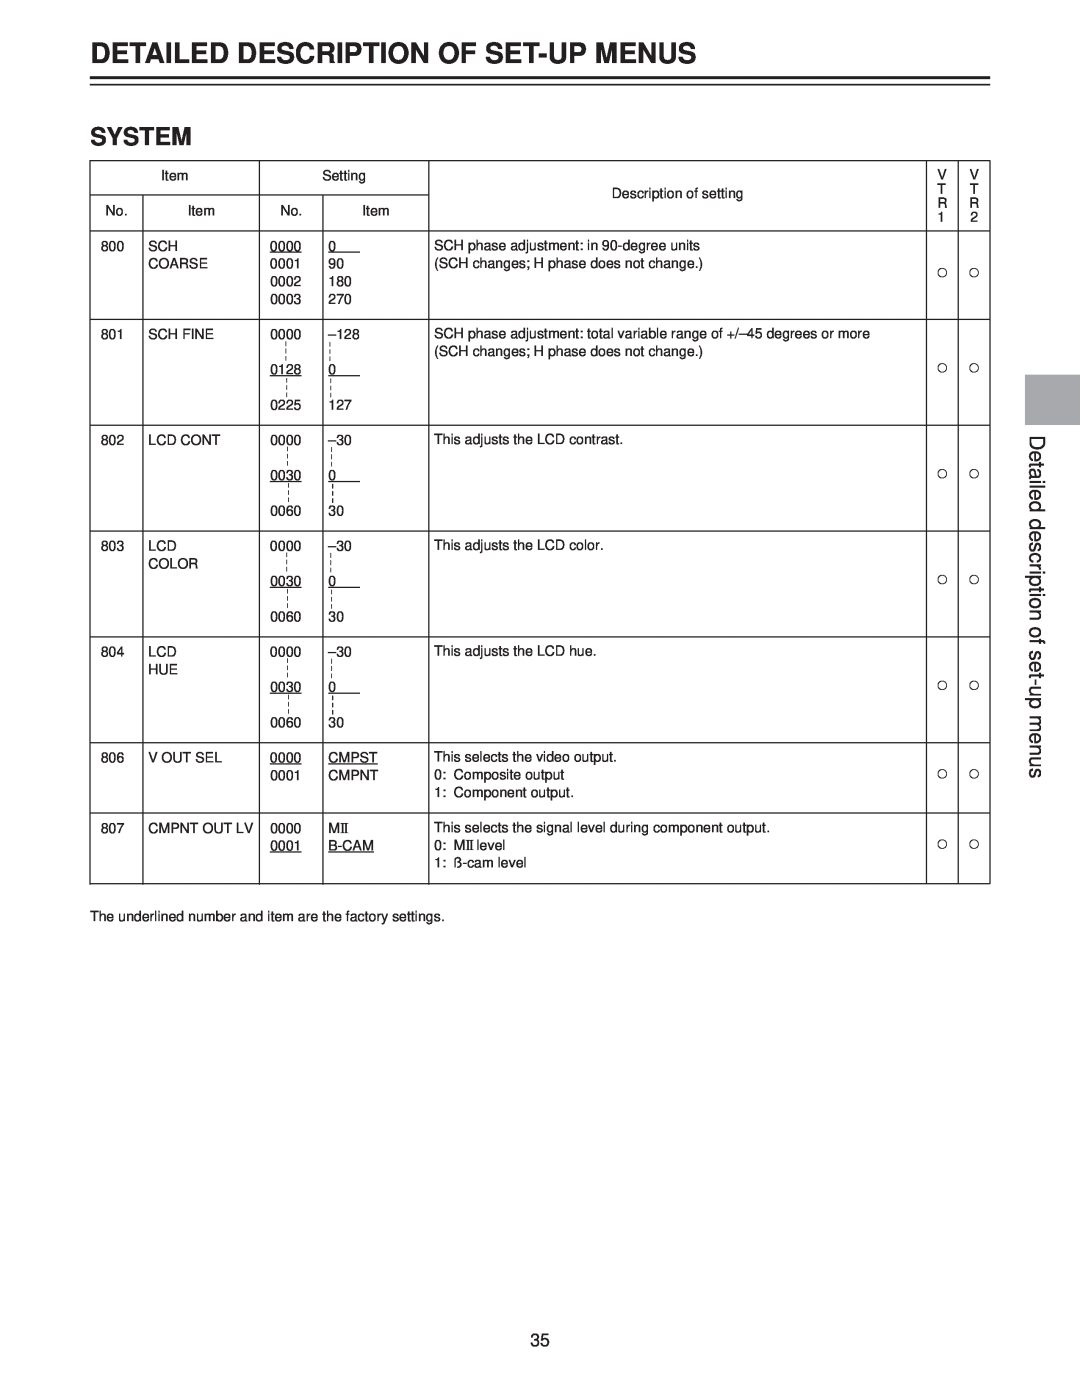 Panasonic AJ-LT85P manual System, Detailed Description Of Set-Up Menus, Detailed description of set-up menus 